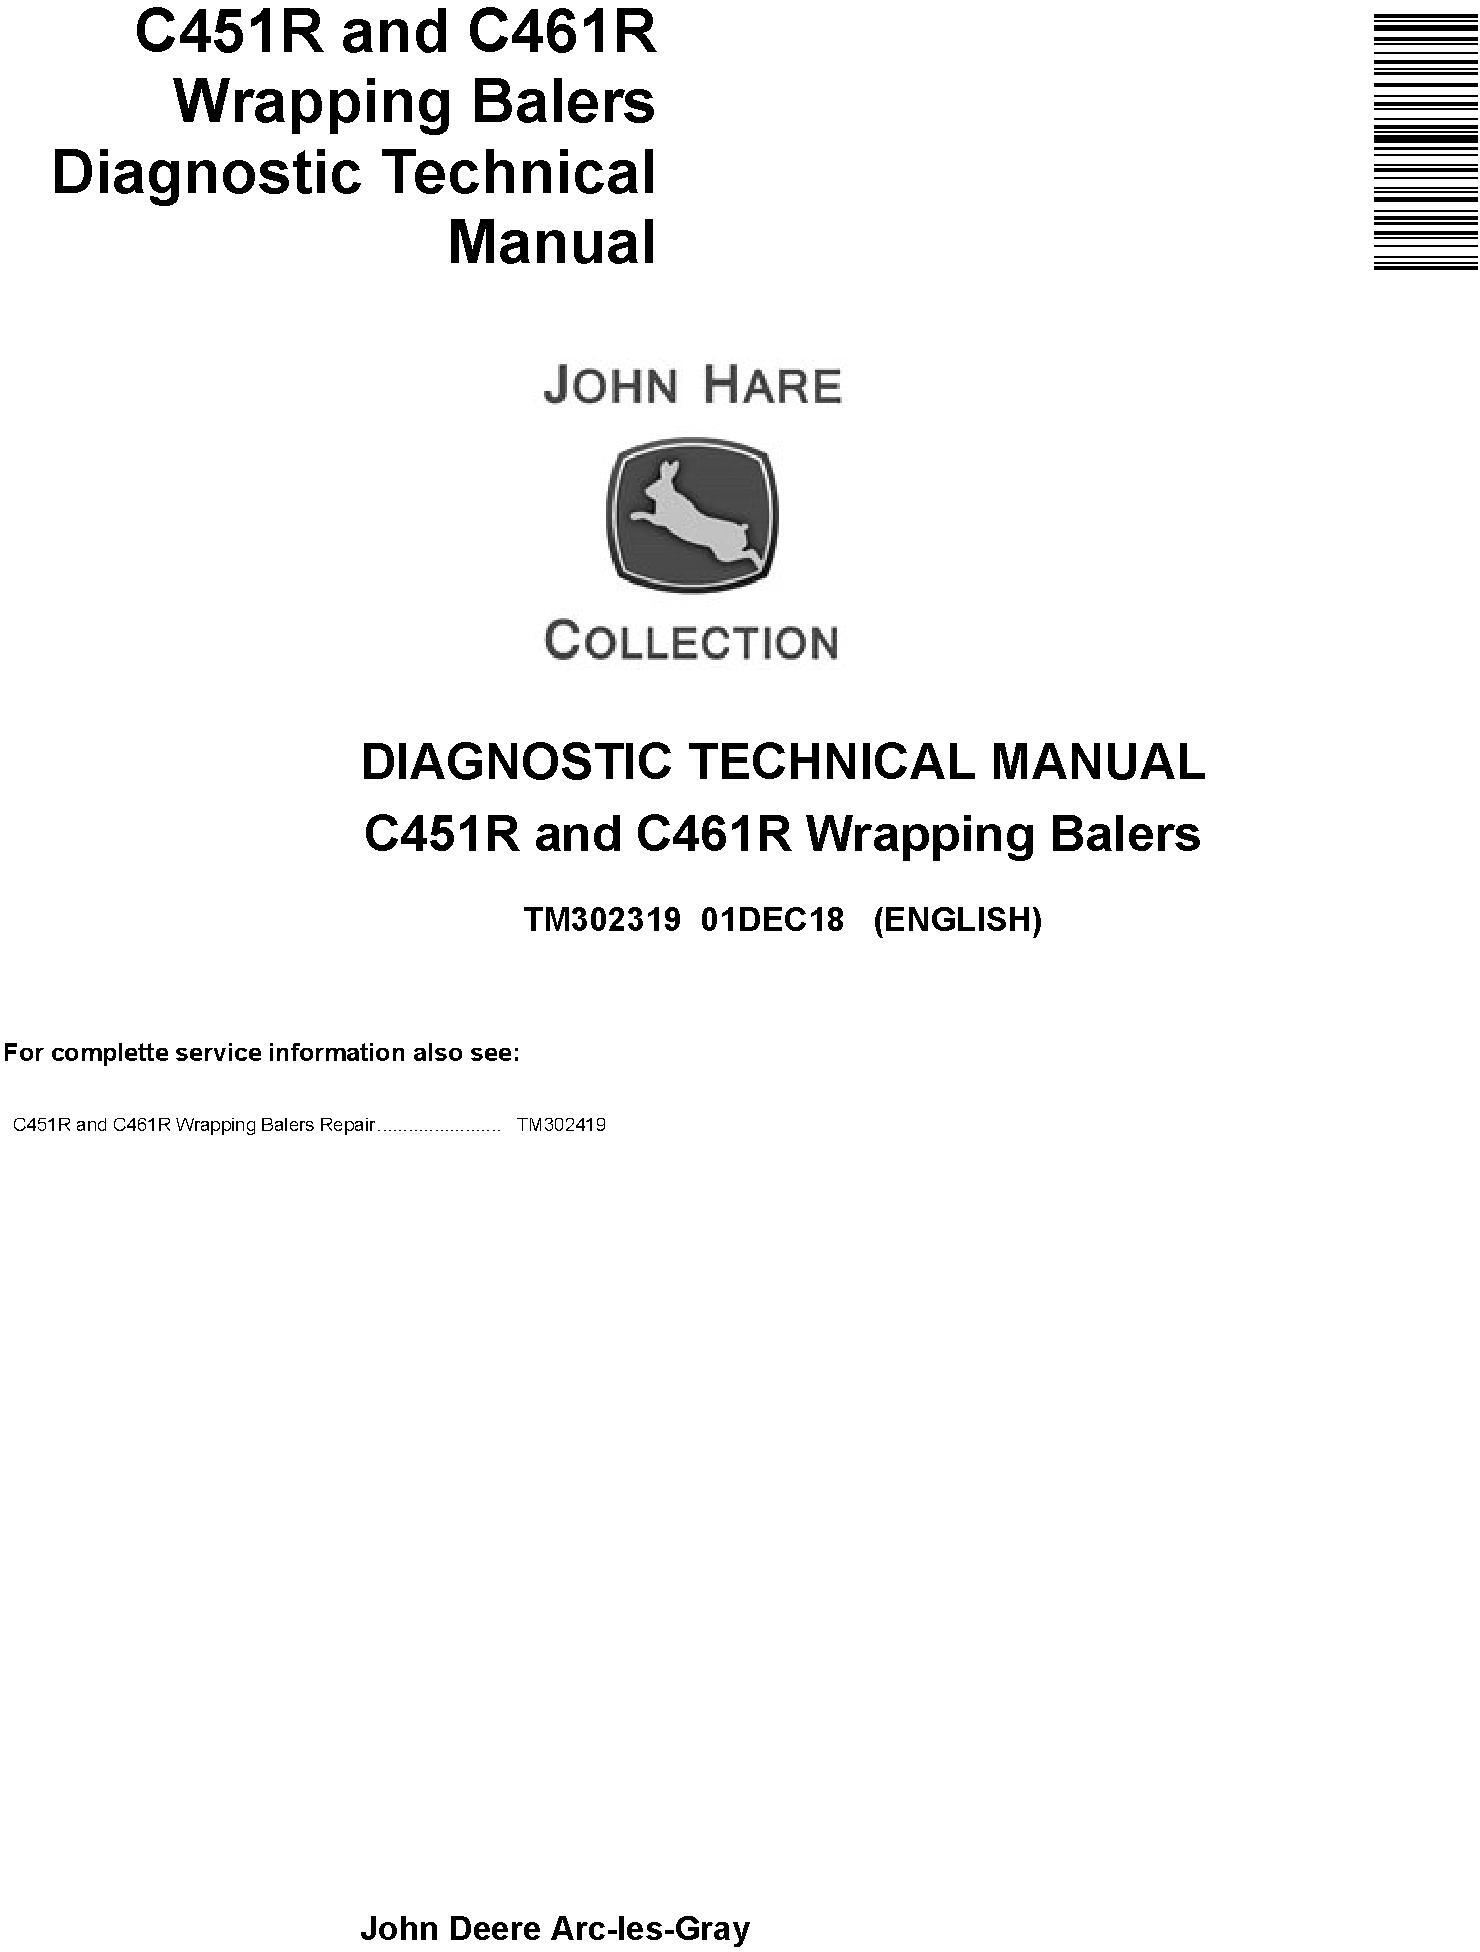 John Deere C451R C461R Wrapping Balers Diagnostic Technical Manual TM302319